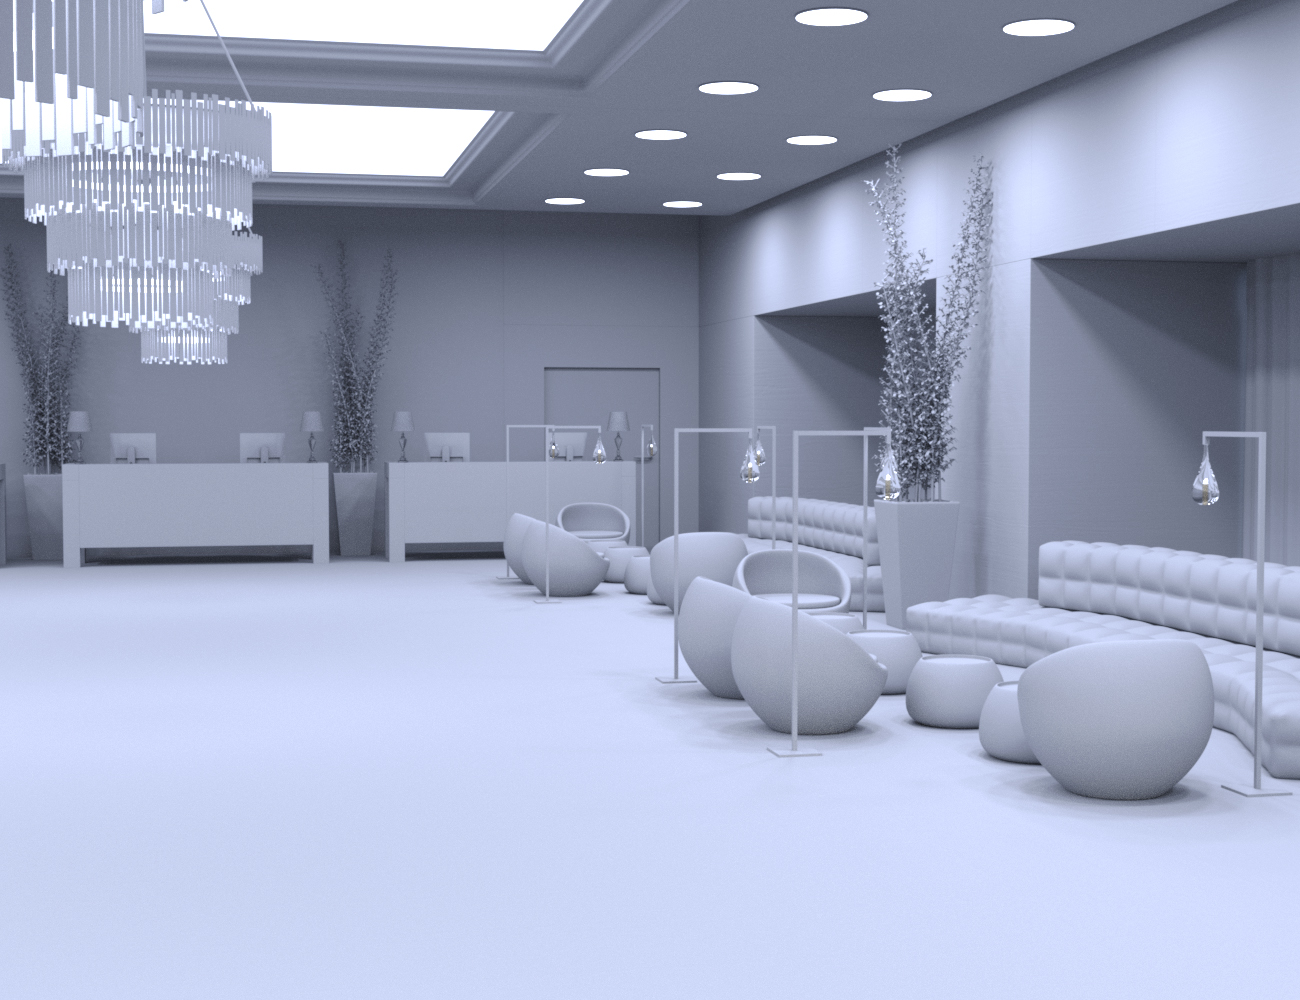 Modern Hotel Lobby by: Charlie, 3D Models by Daz 3D